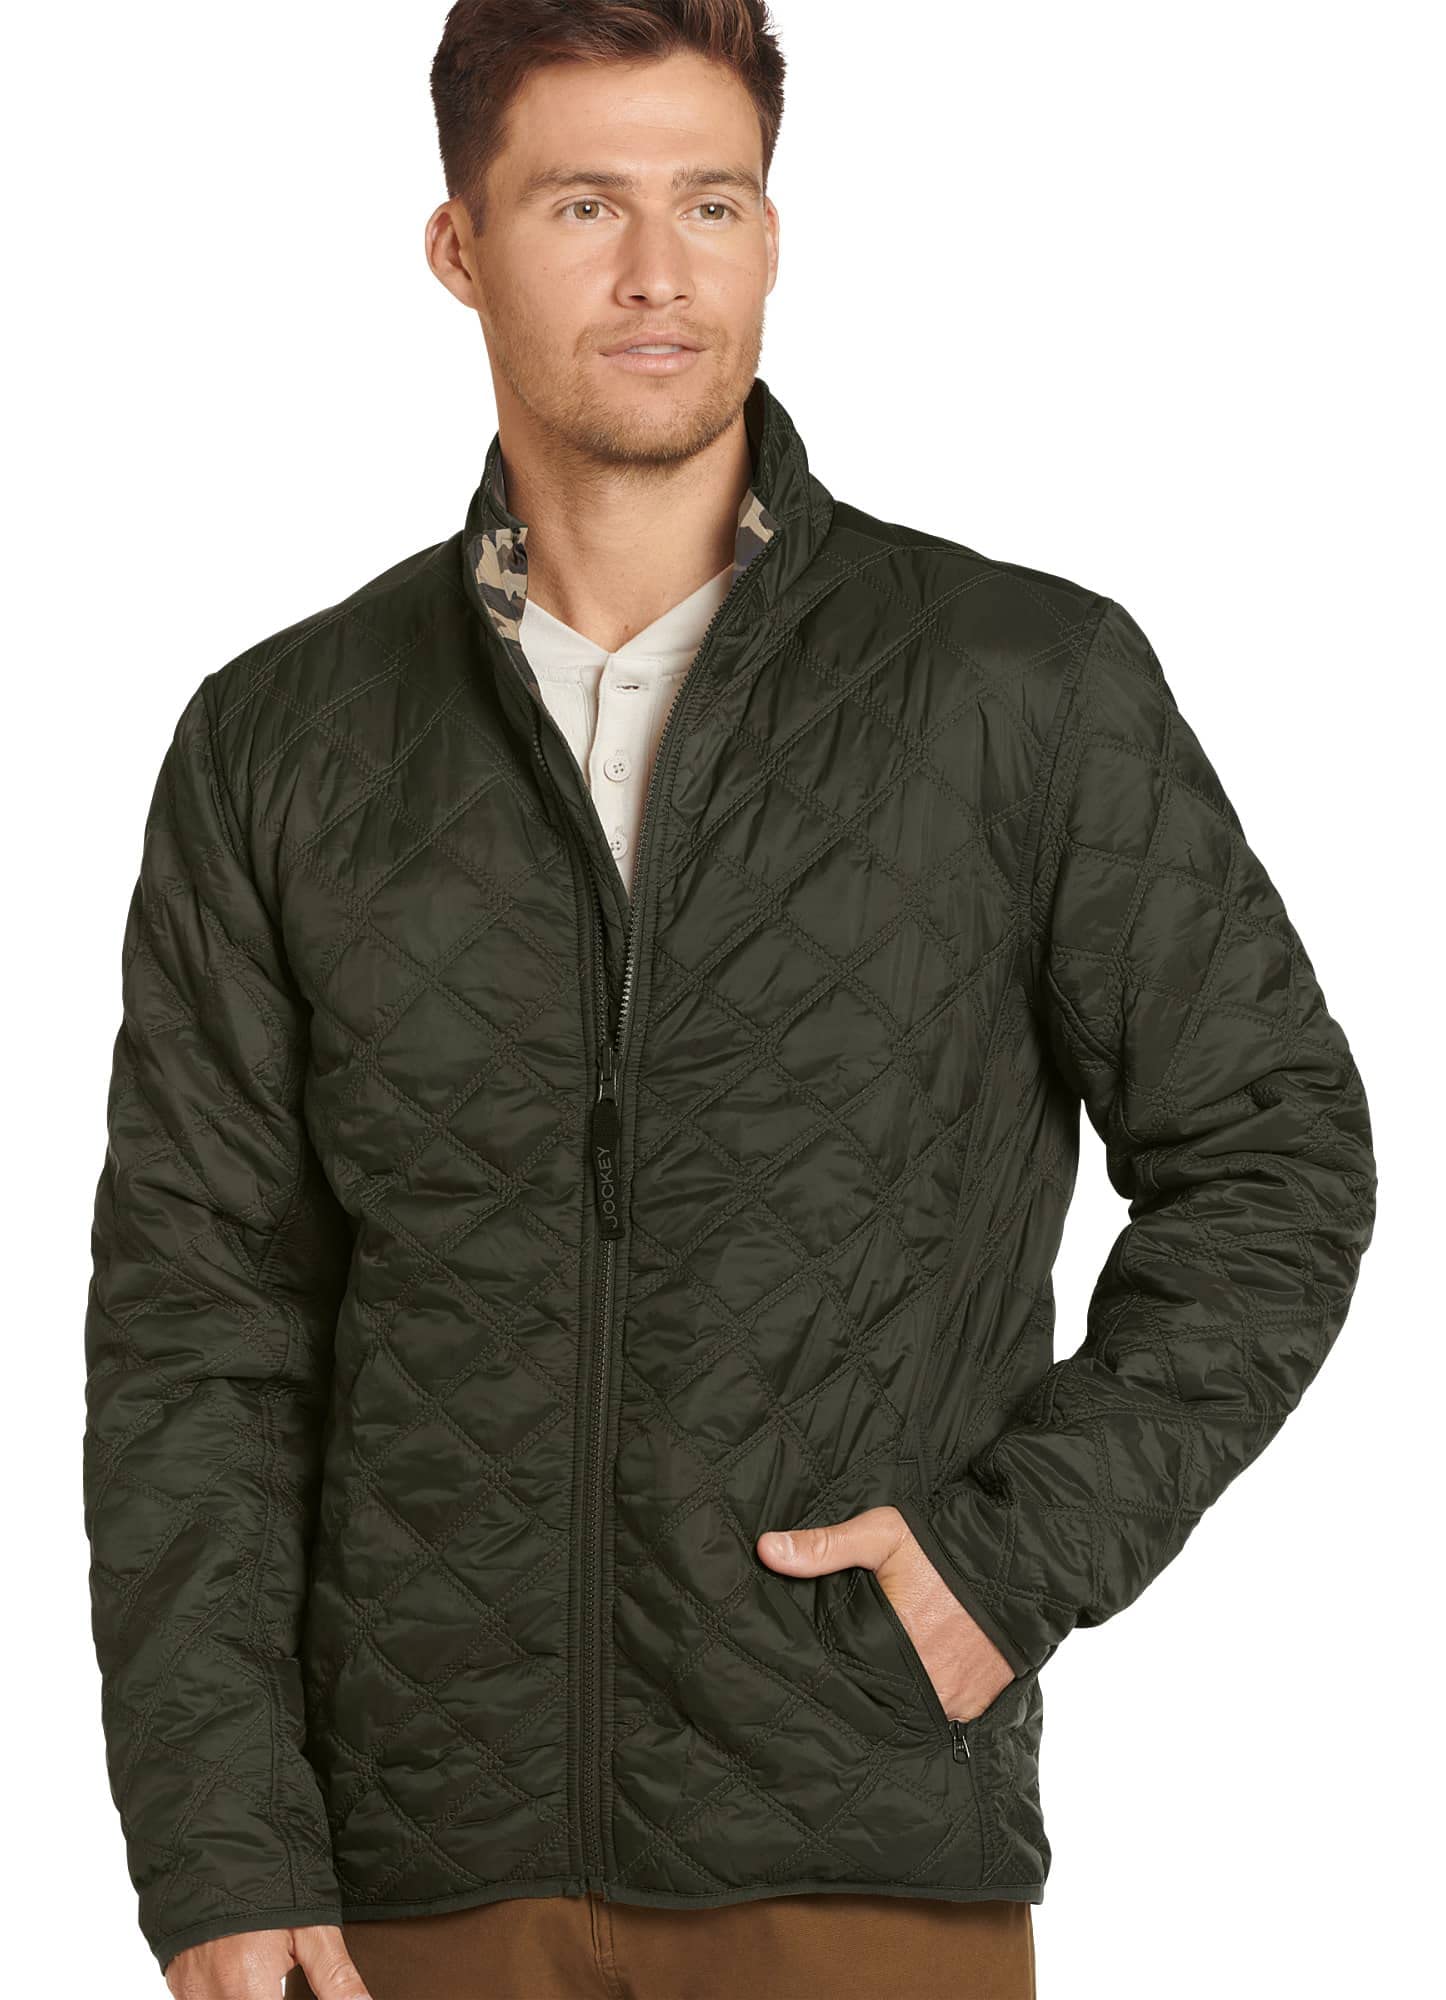 Jockey Men's Casualwear Outdoors Reversible Quilted Jacket $11.99 at Jockey via Amazon